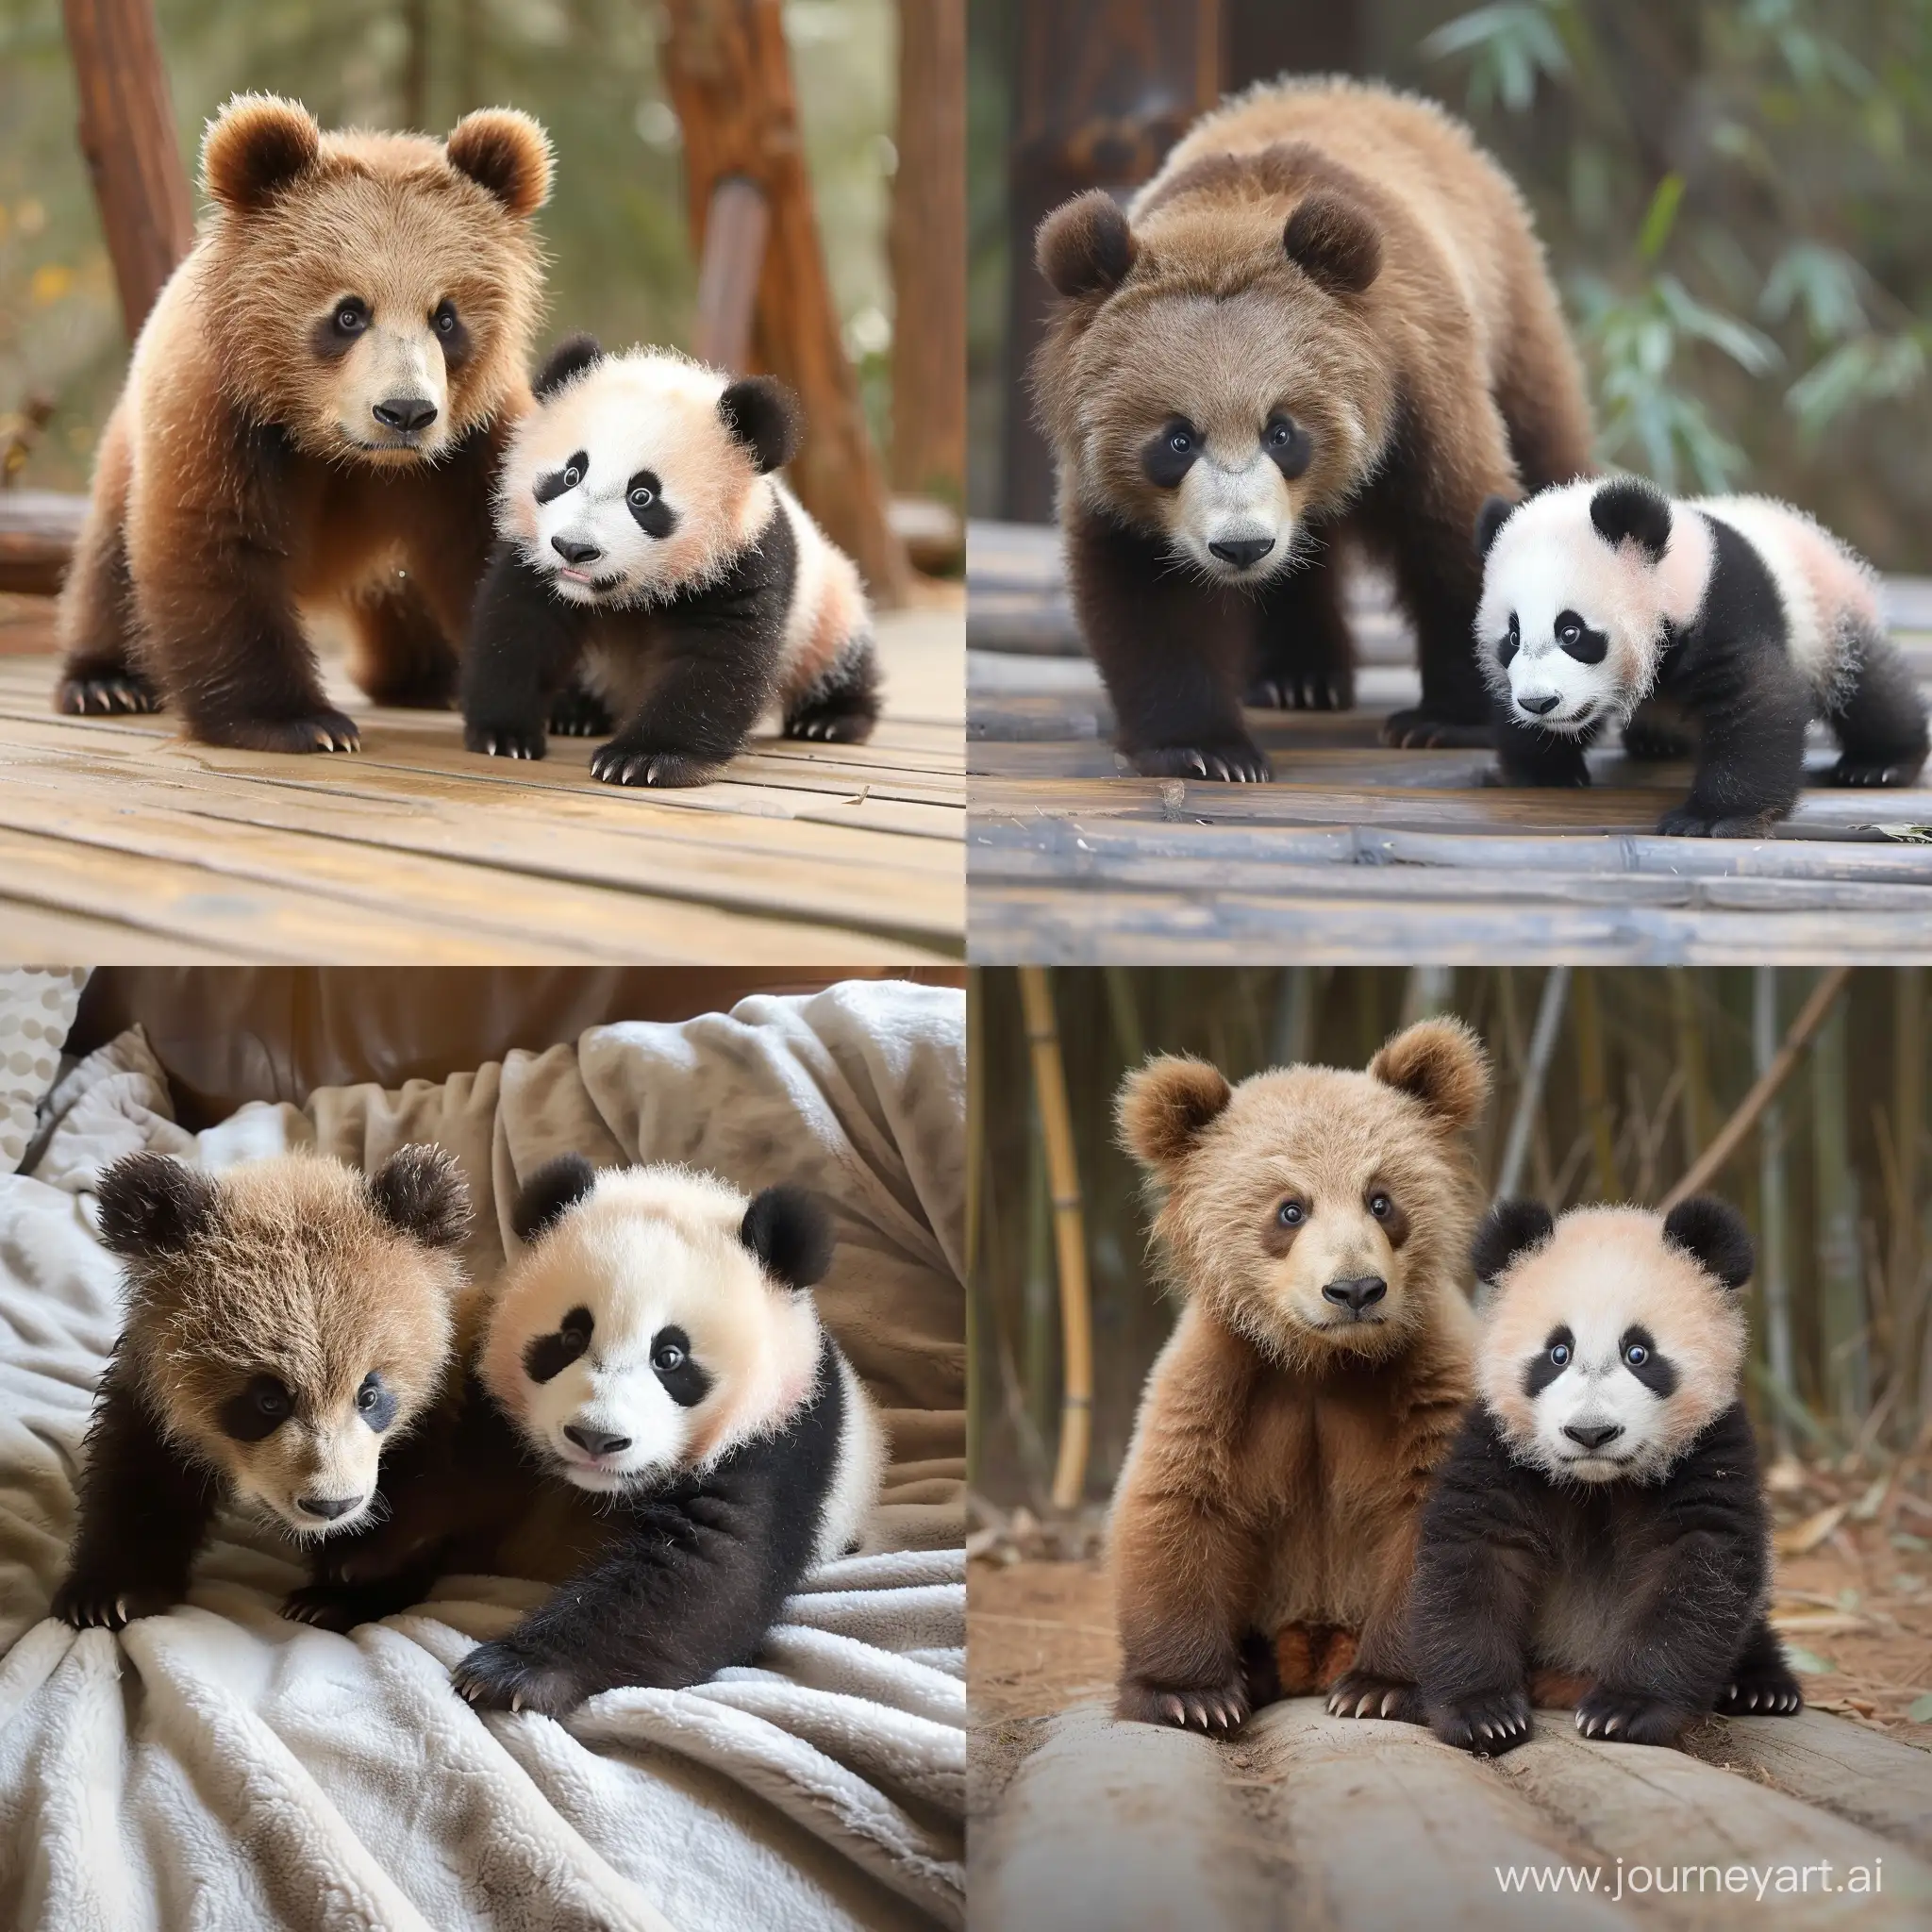 Adorable-Mix-of-Brown-Bear-and-Panda-Cub-Playfully-Interacting